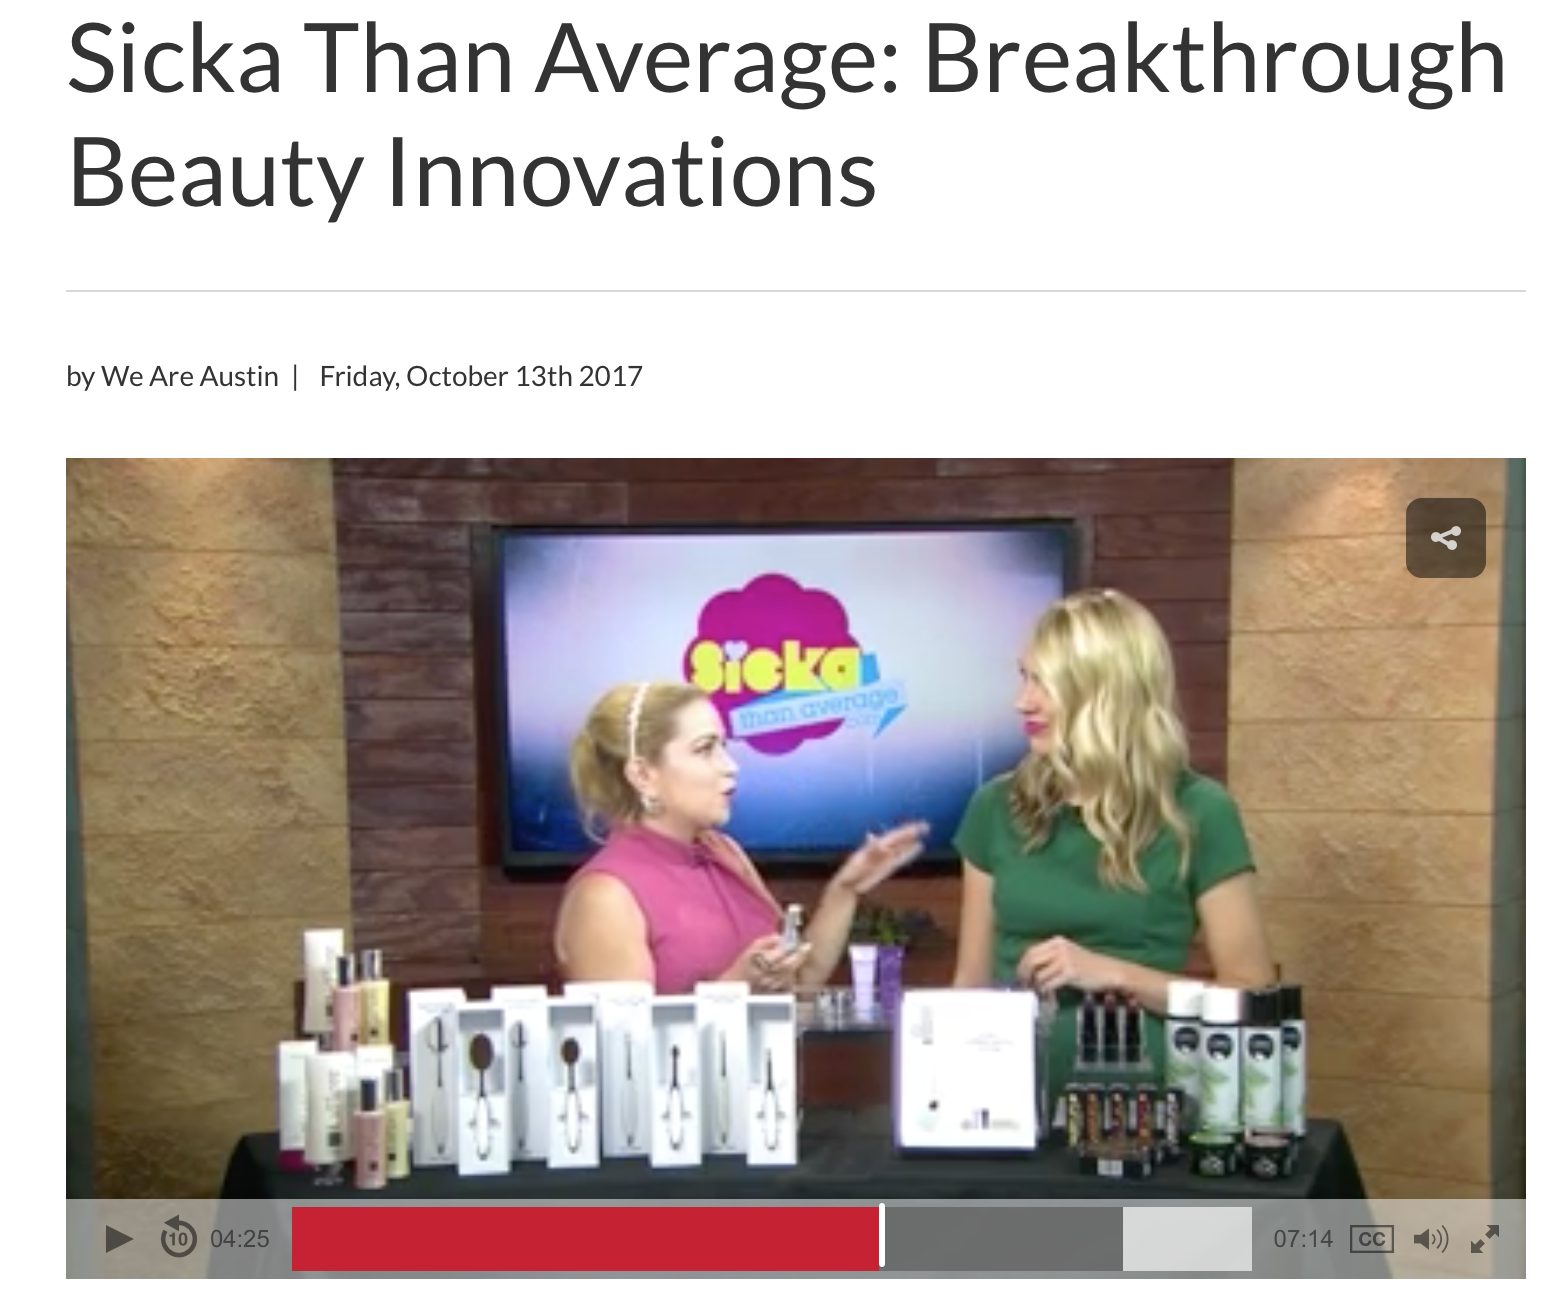 Sicka Than Average: Breakthrough Beauty Innovations